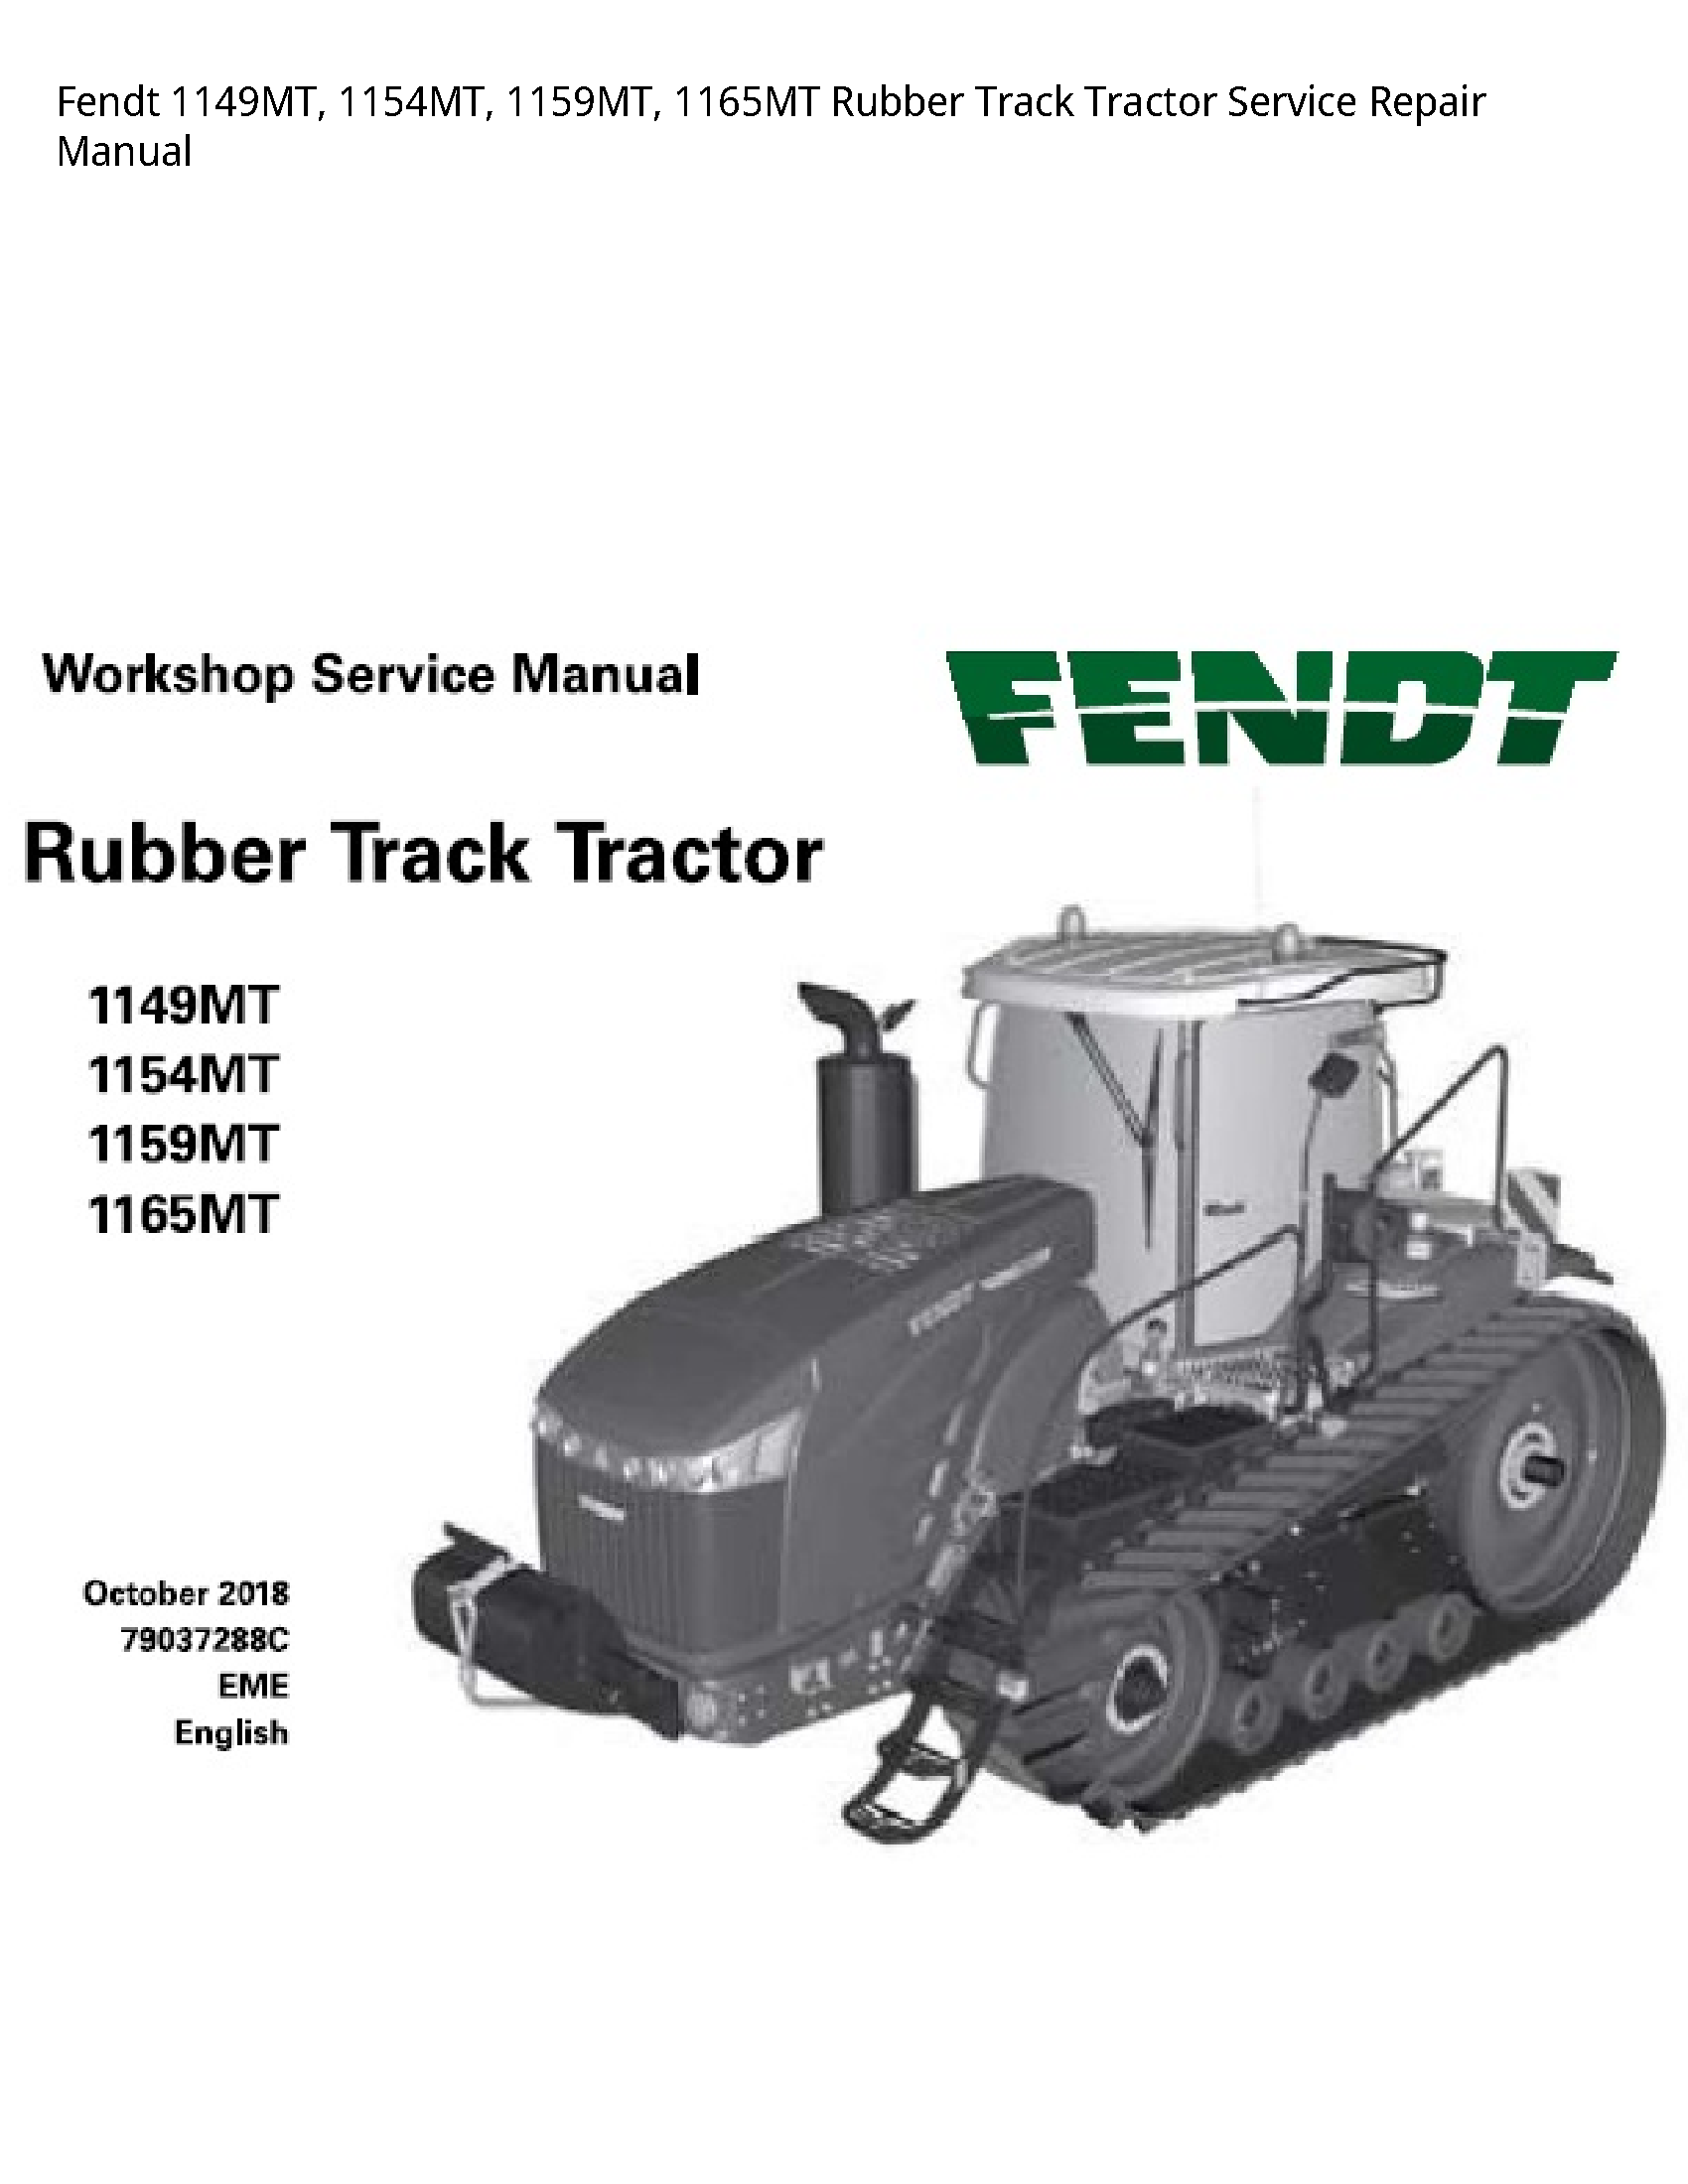 Fendt 1149MT Rubber Track Tractor manual